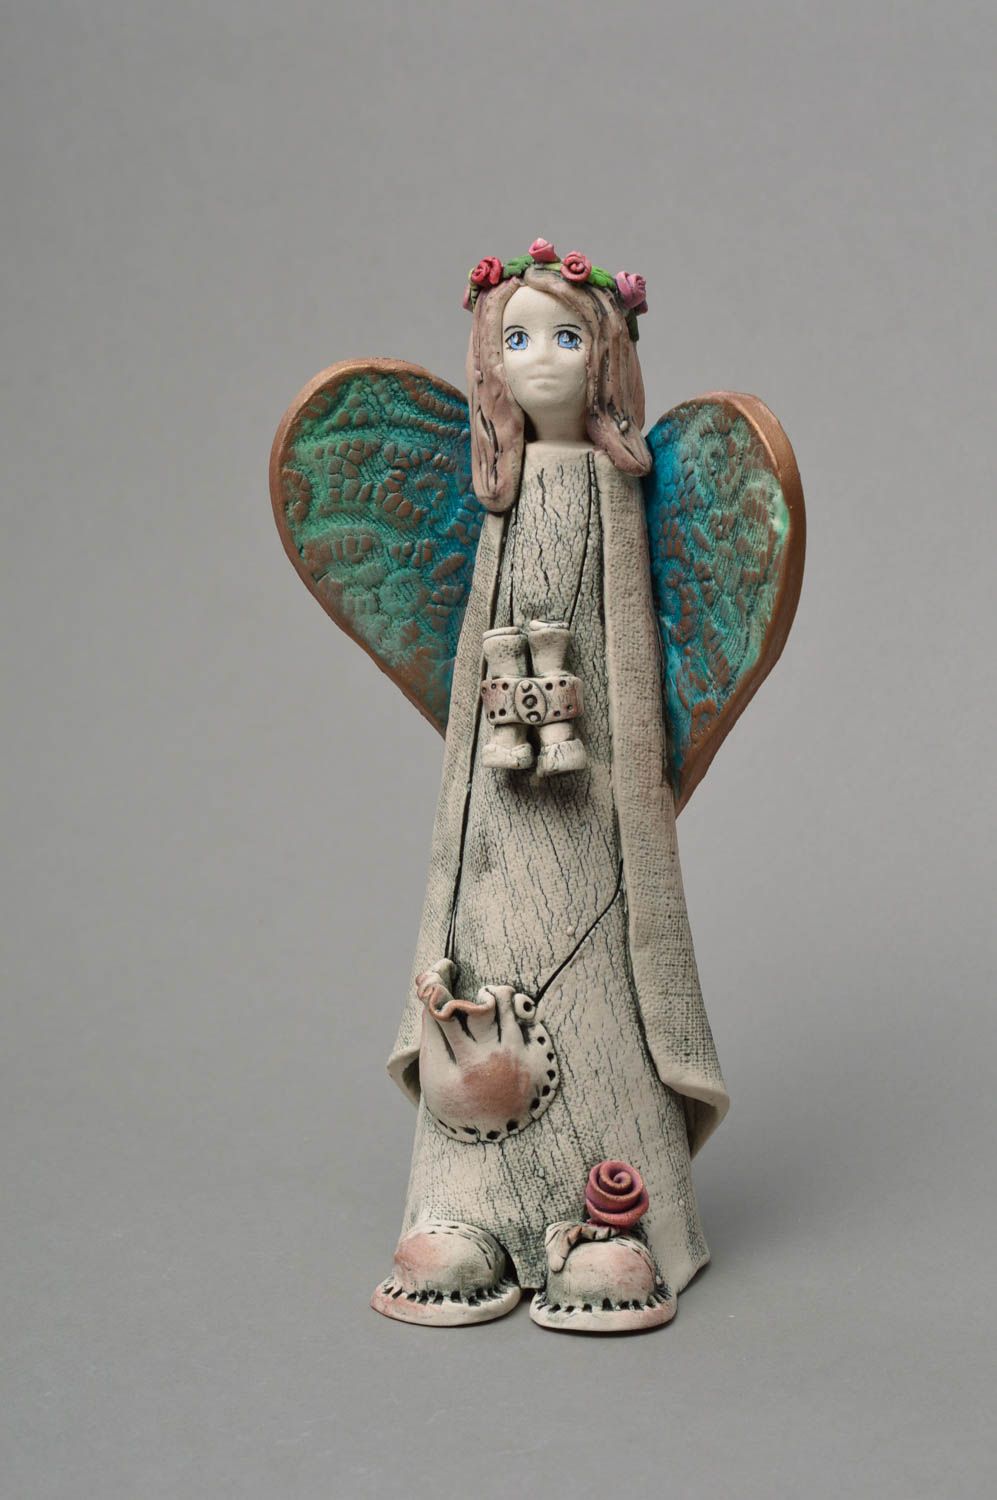 Handmade porcelain figurine ceramic figurine sculpture art decorative use only photo 1